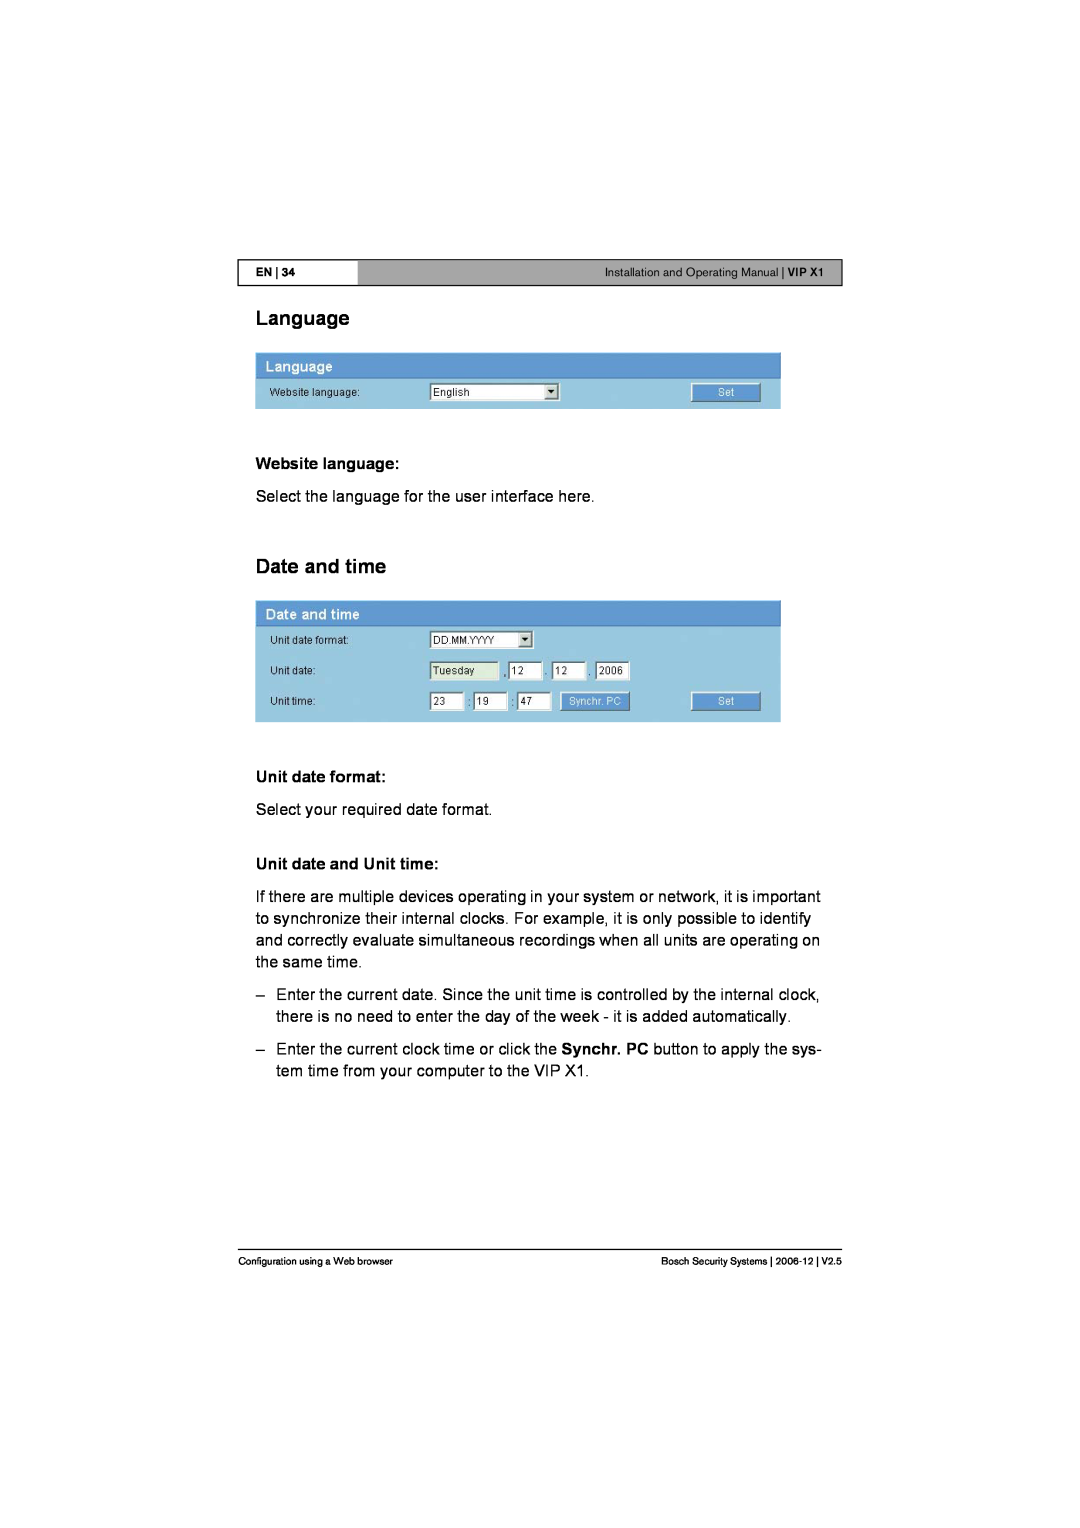 Bosch Appliances VIP X1 manual Language, Date and time, Website language, Unit date format, Unit date and Unit time 